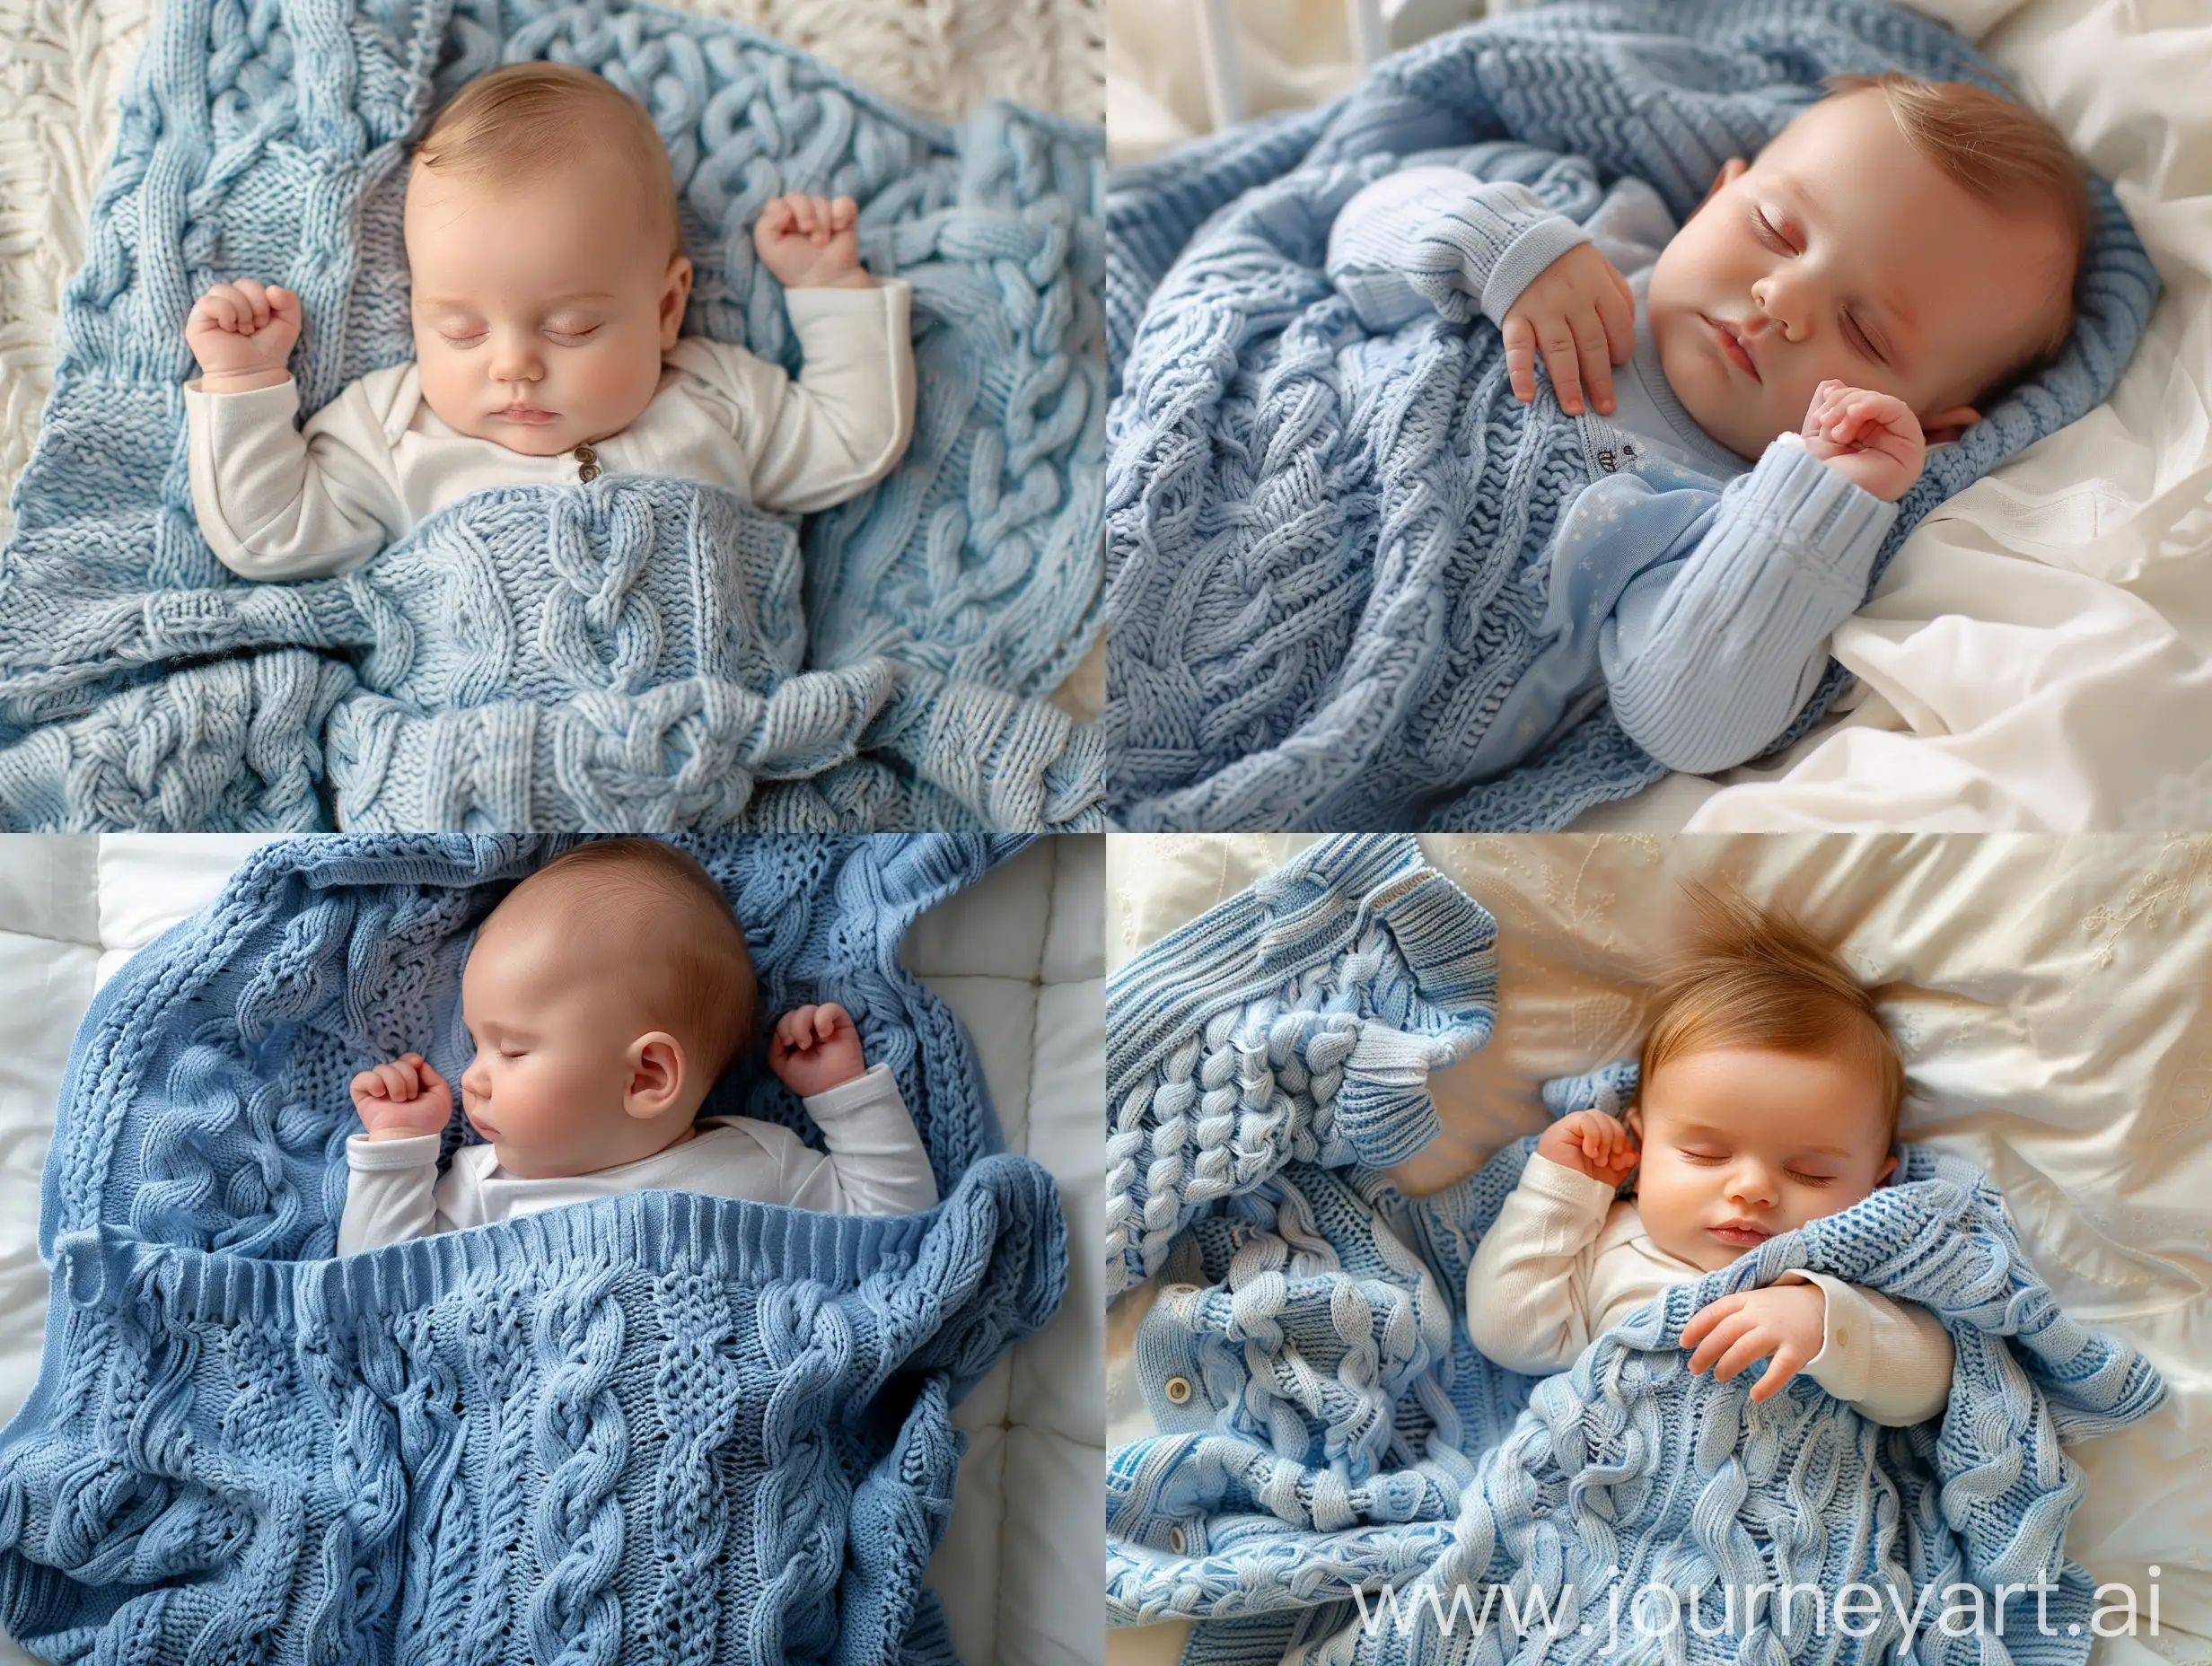 Newborn-Baby-Boy-Sleeping-in-Cozy-Blue-Knitted-Blanket